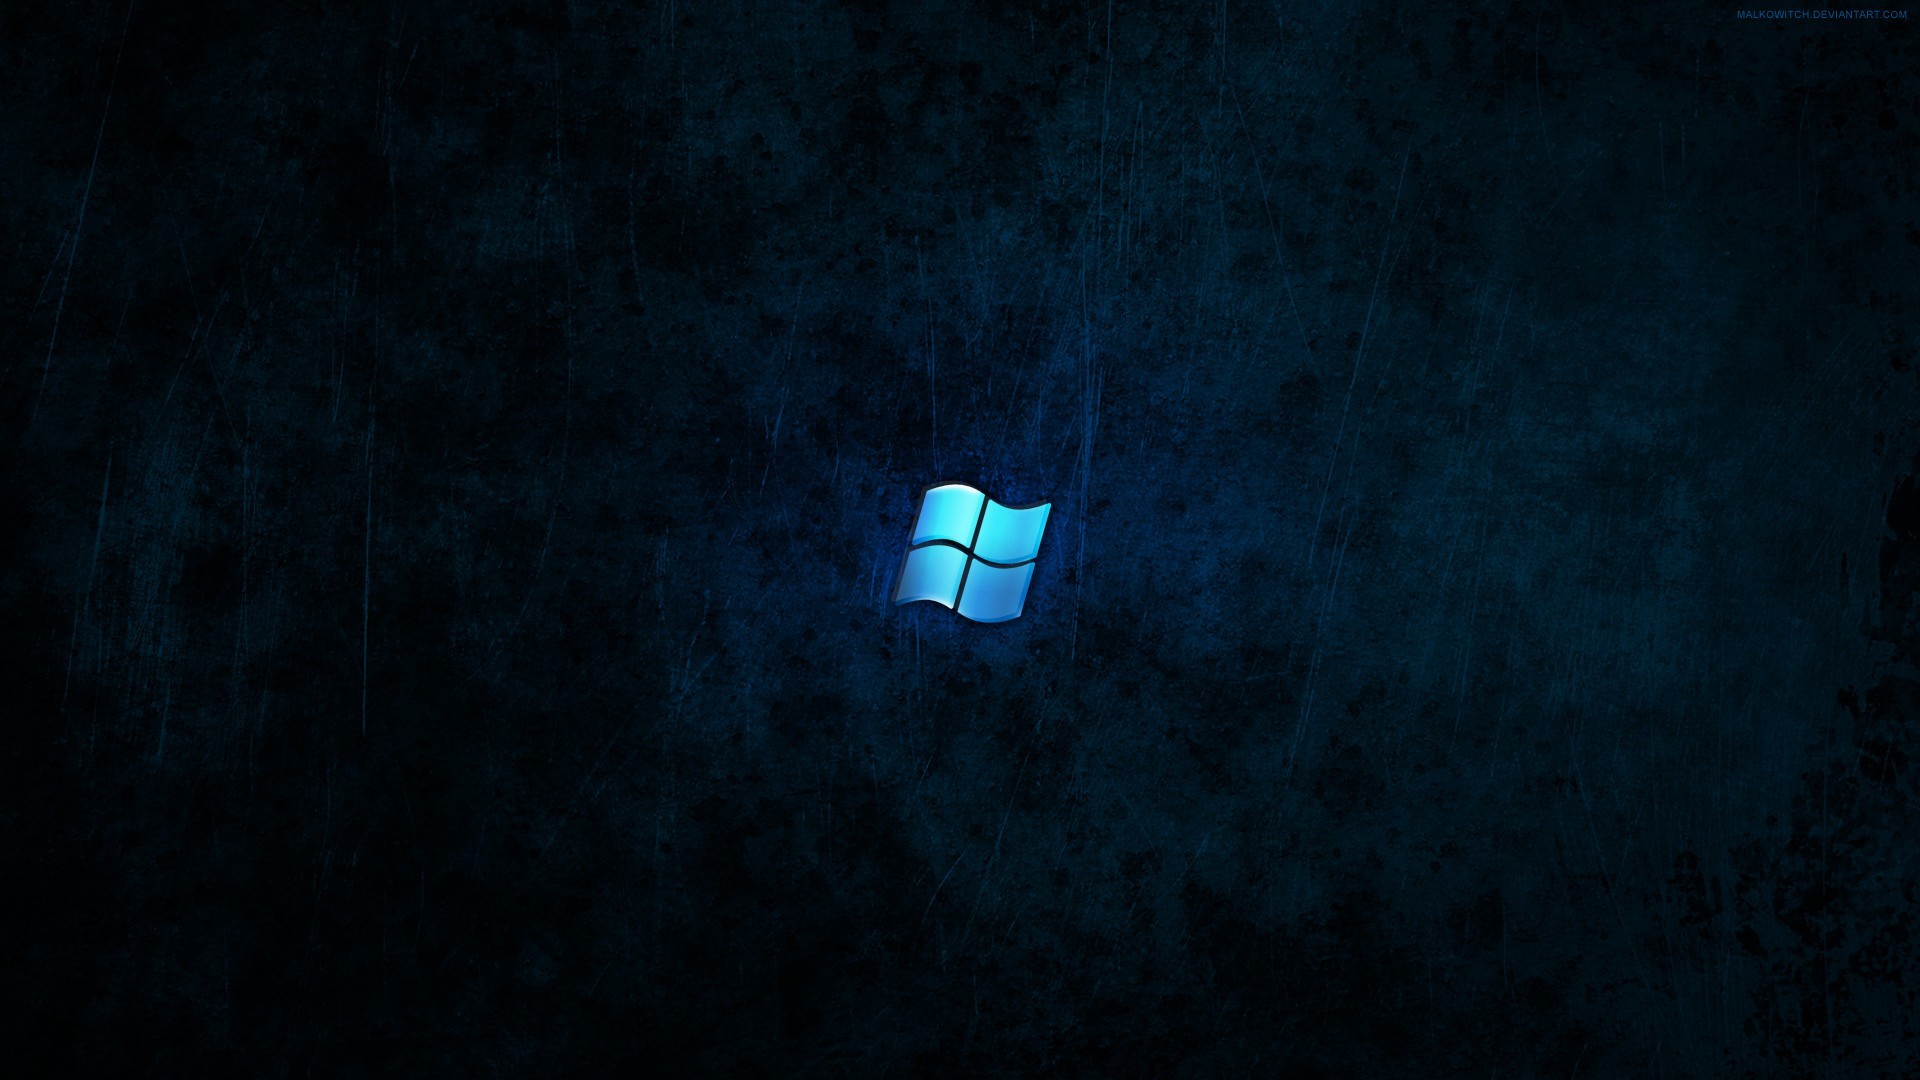 Pc logo for windows 10 free